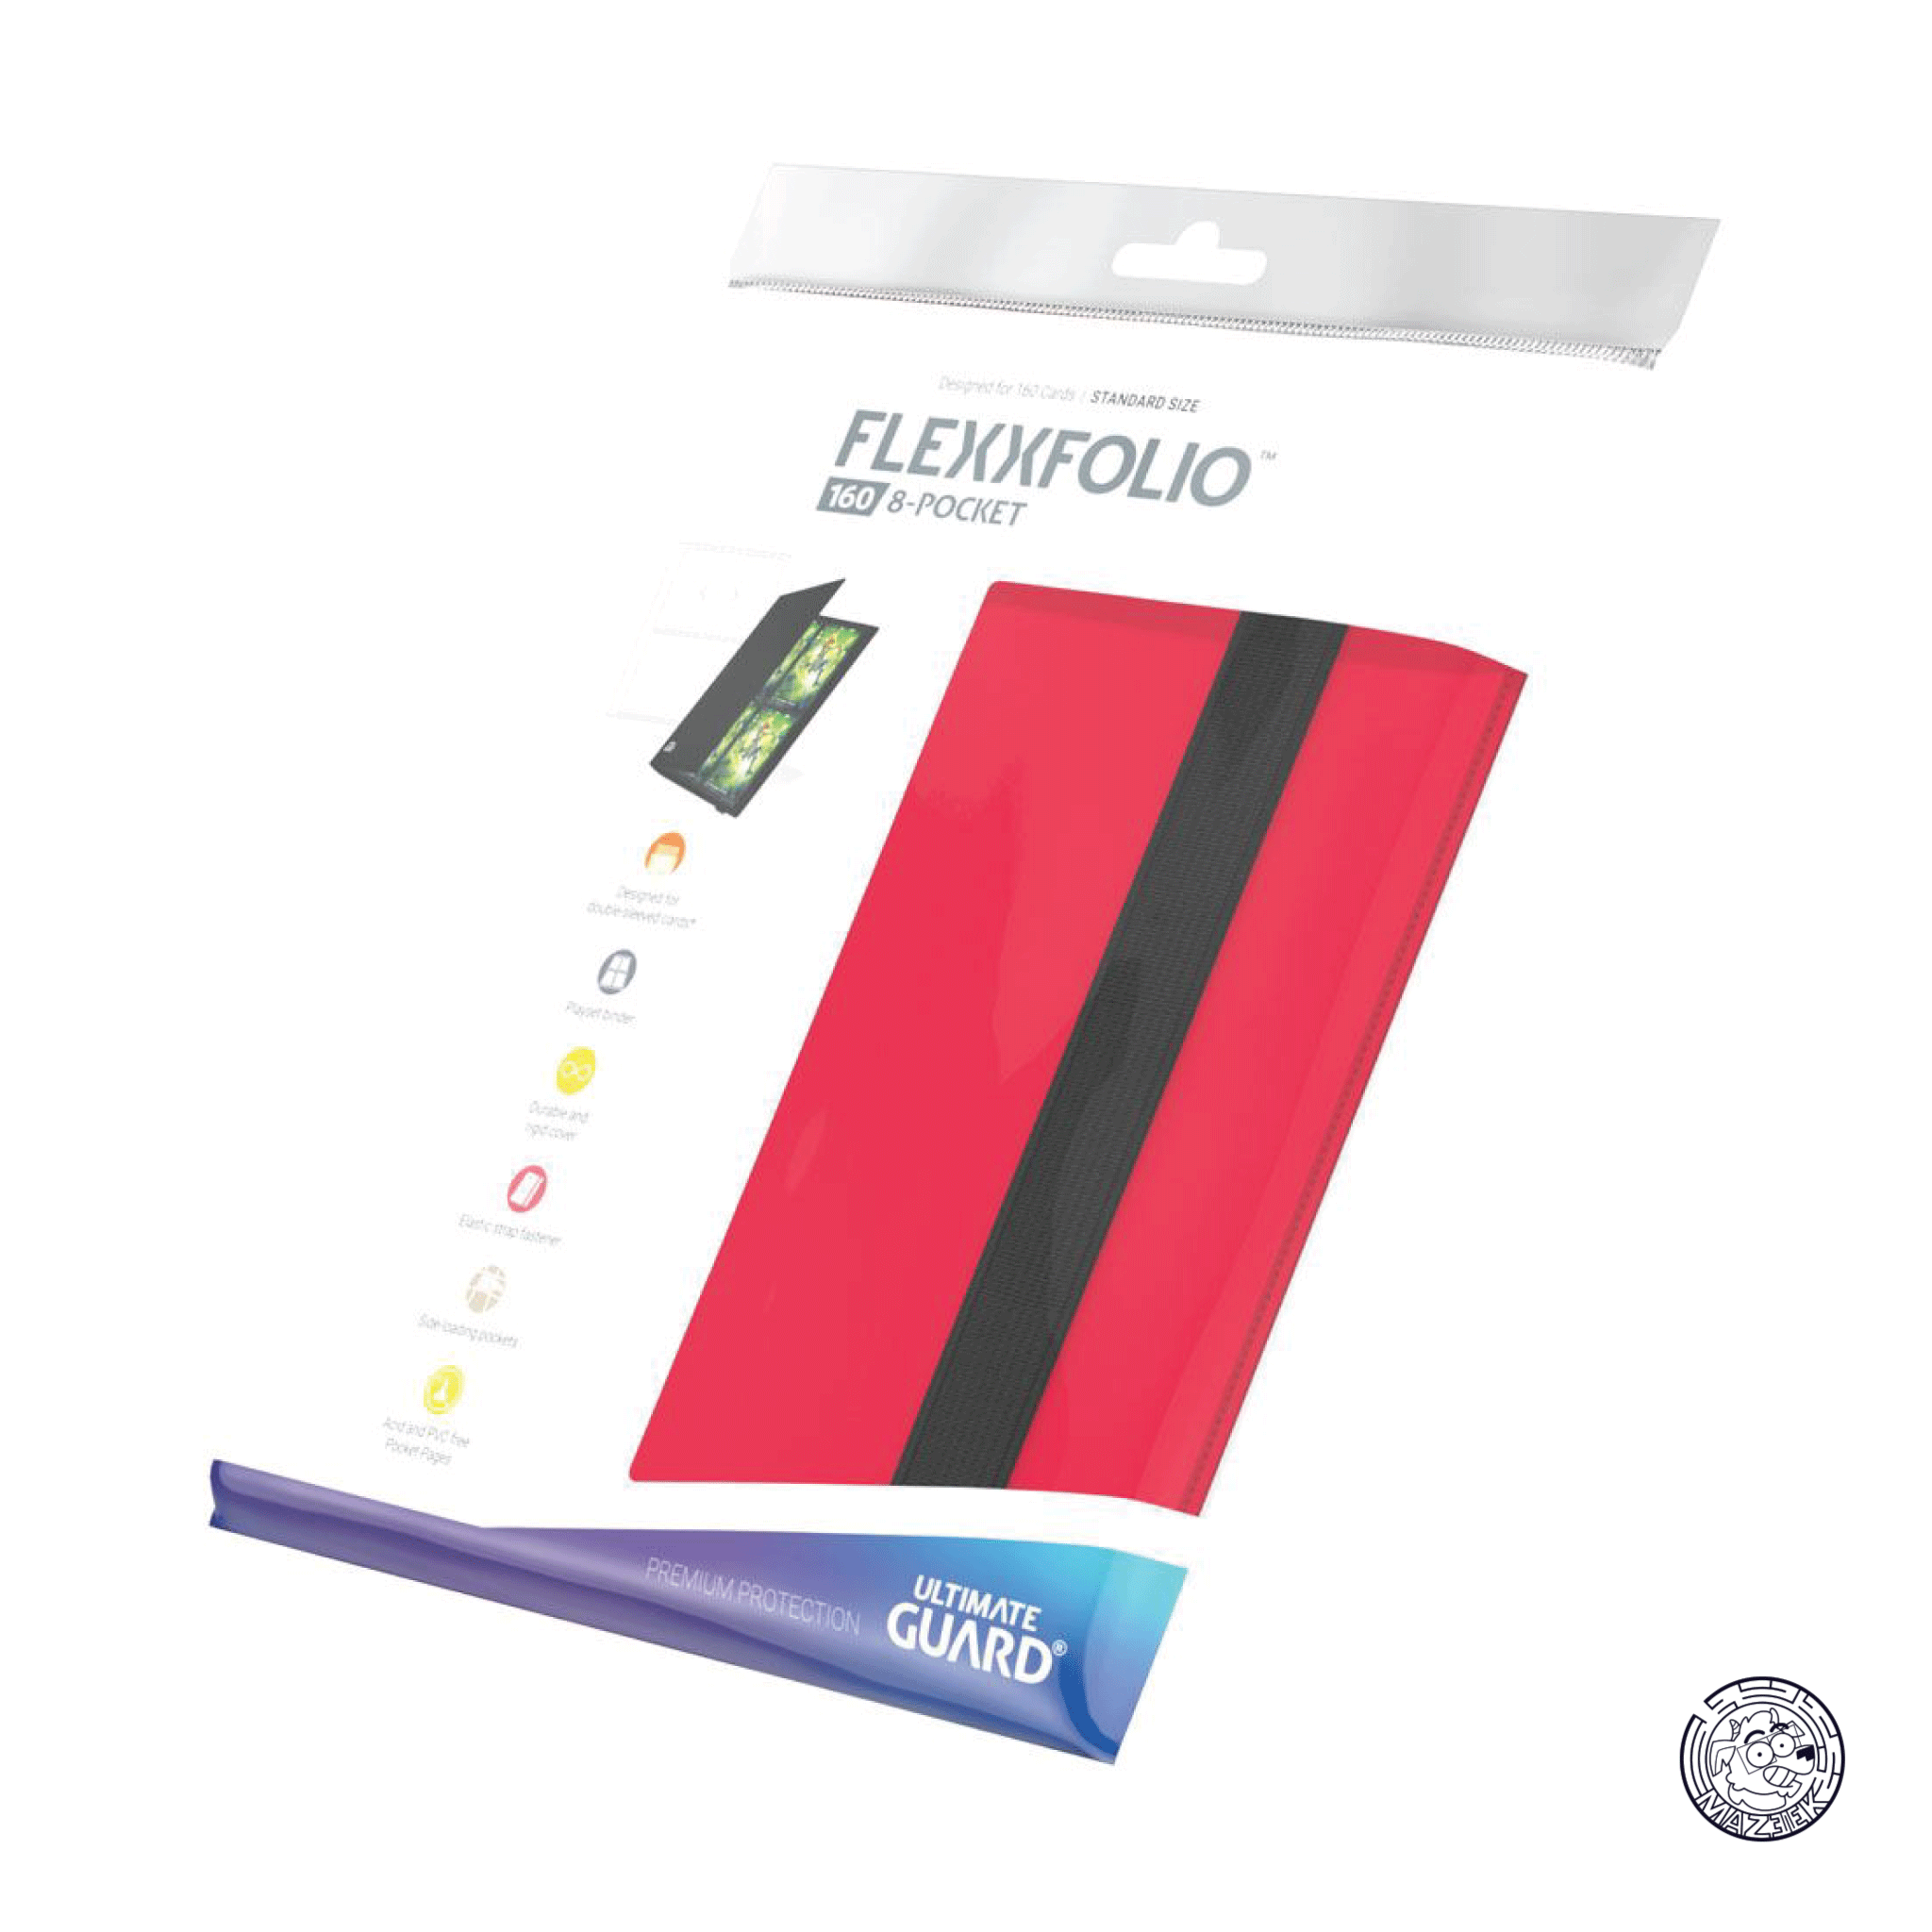 Ultimate Guard - Flexxfolio 160 - 8-Pocket (Red)